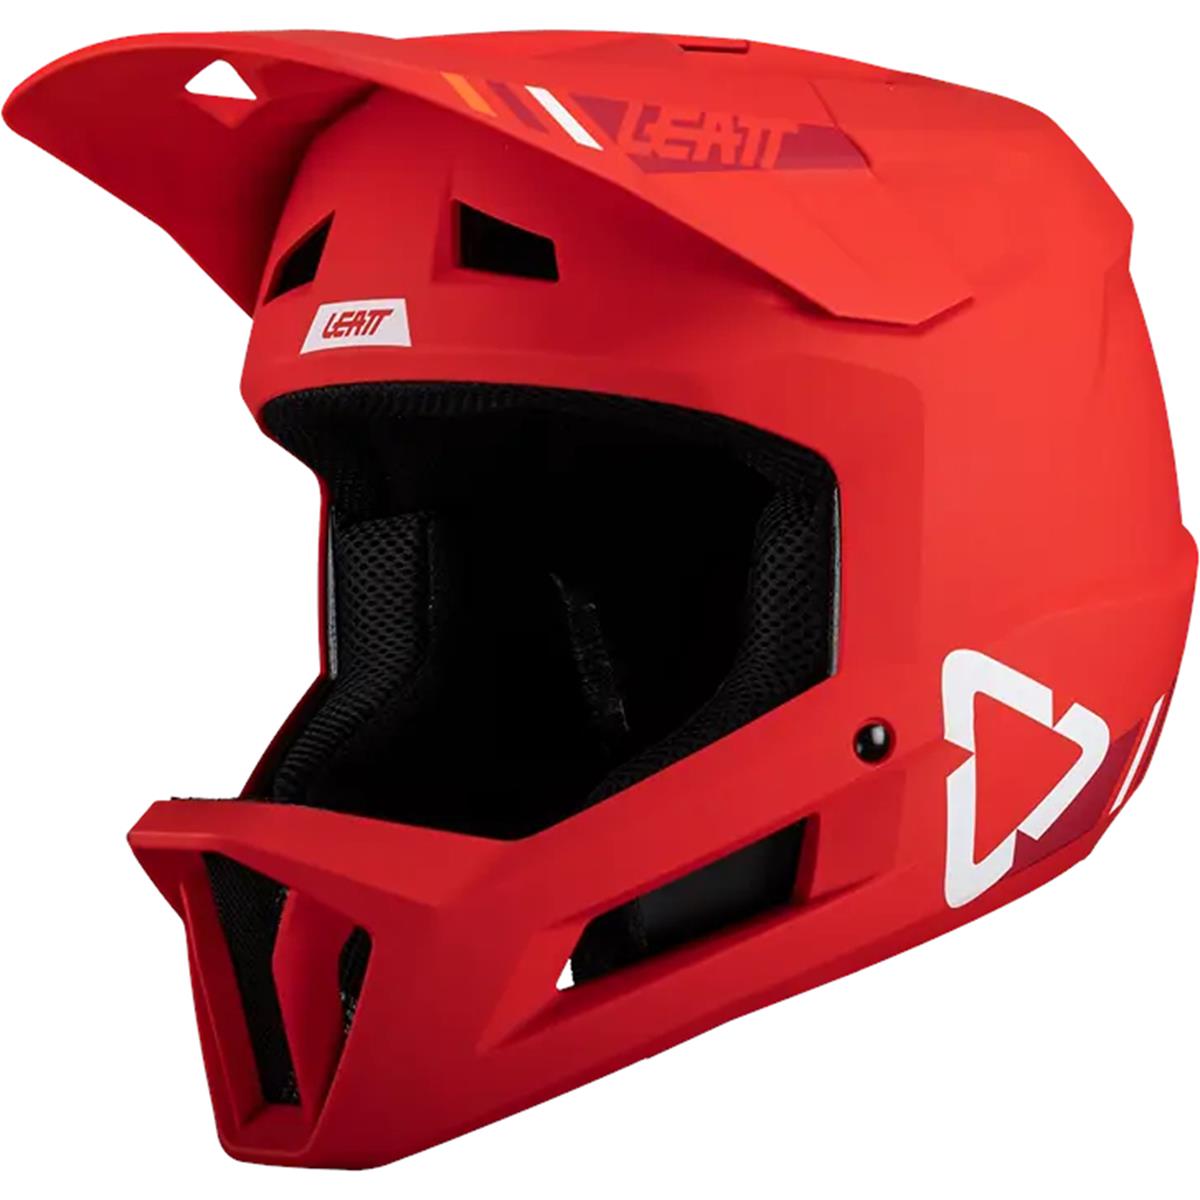 Leatt Downhill MTB Helmet 1.0 Gravity Red